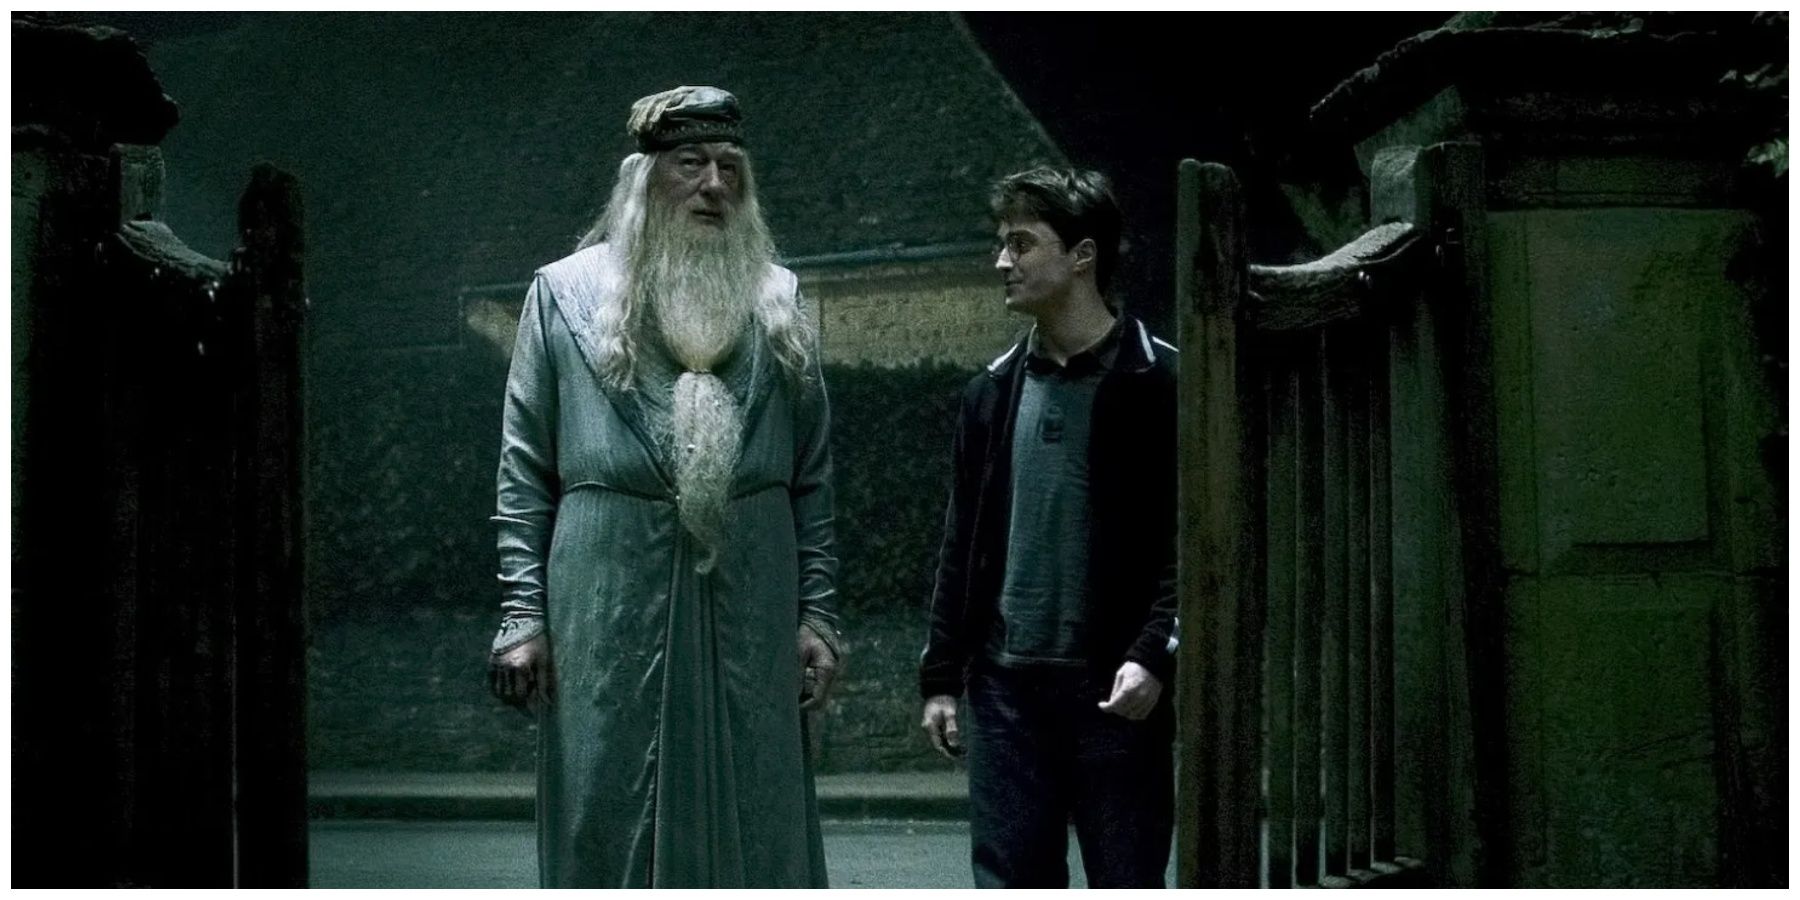 Michael Gambon as Albus Dumbledore. Daniel Radcliffe as Harry Potter.